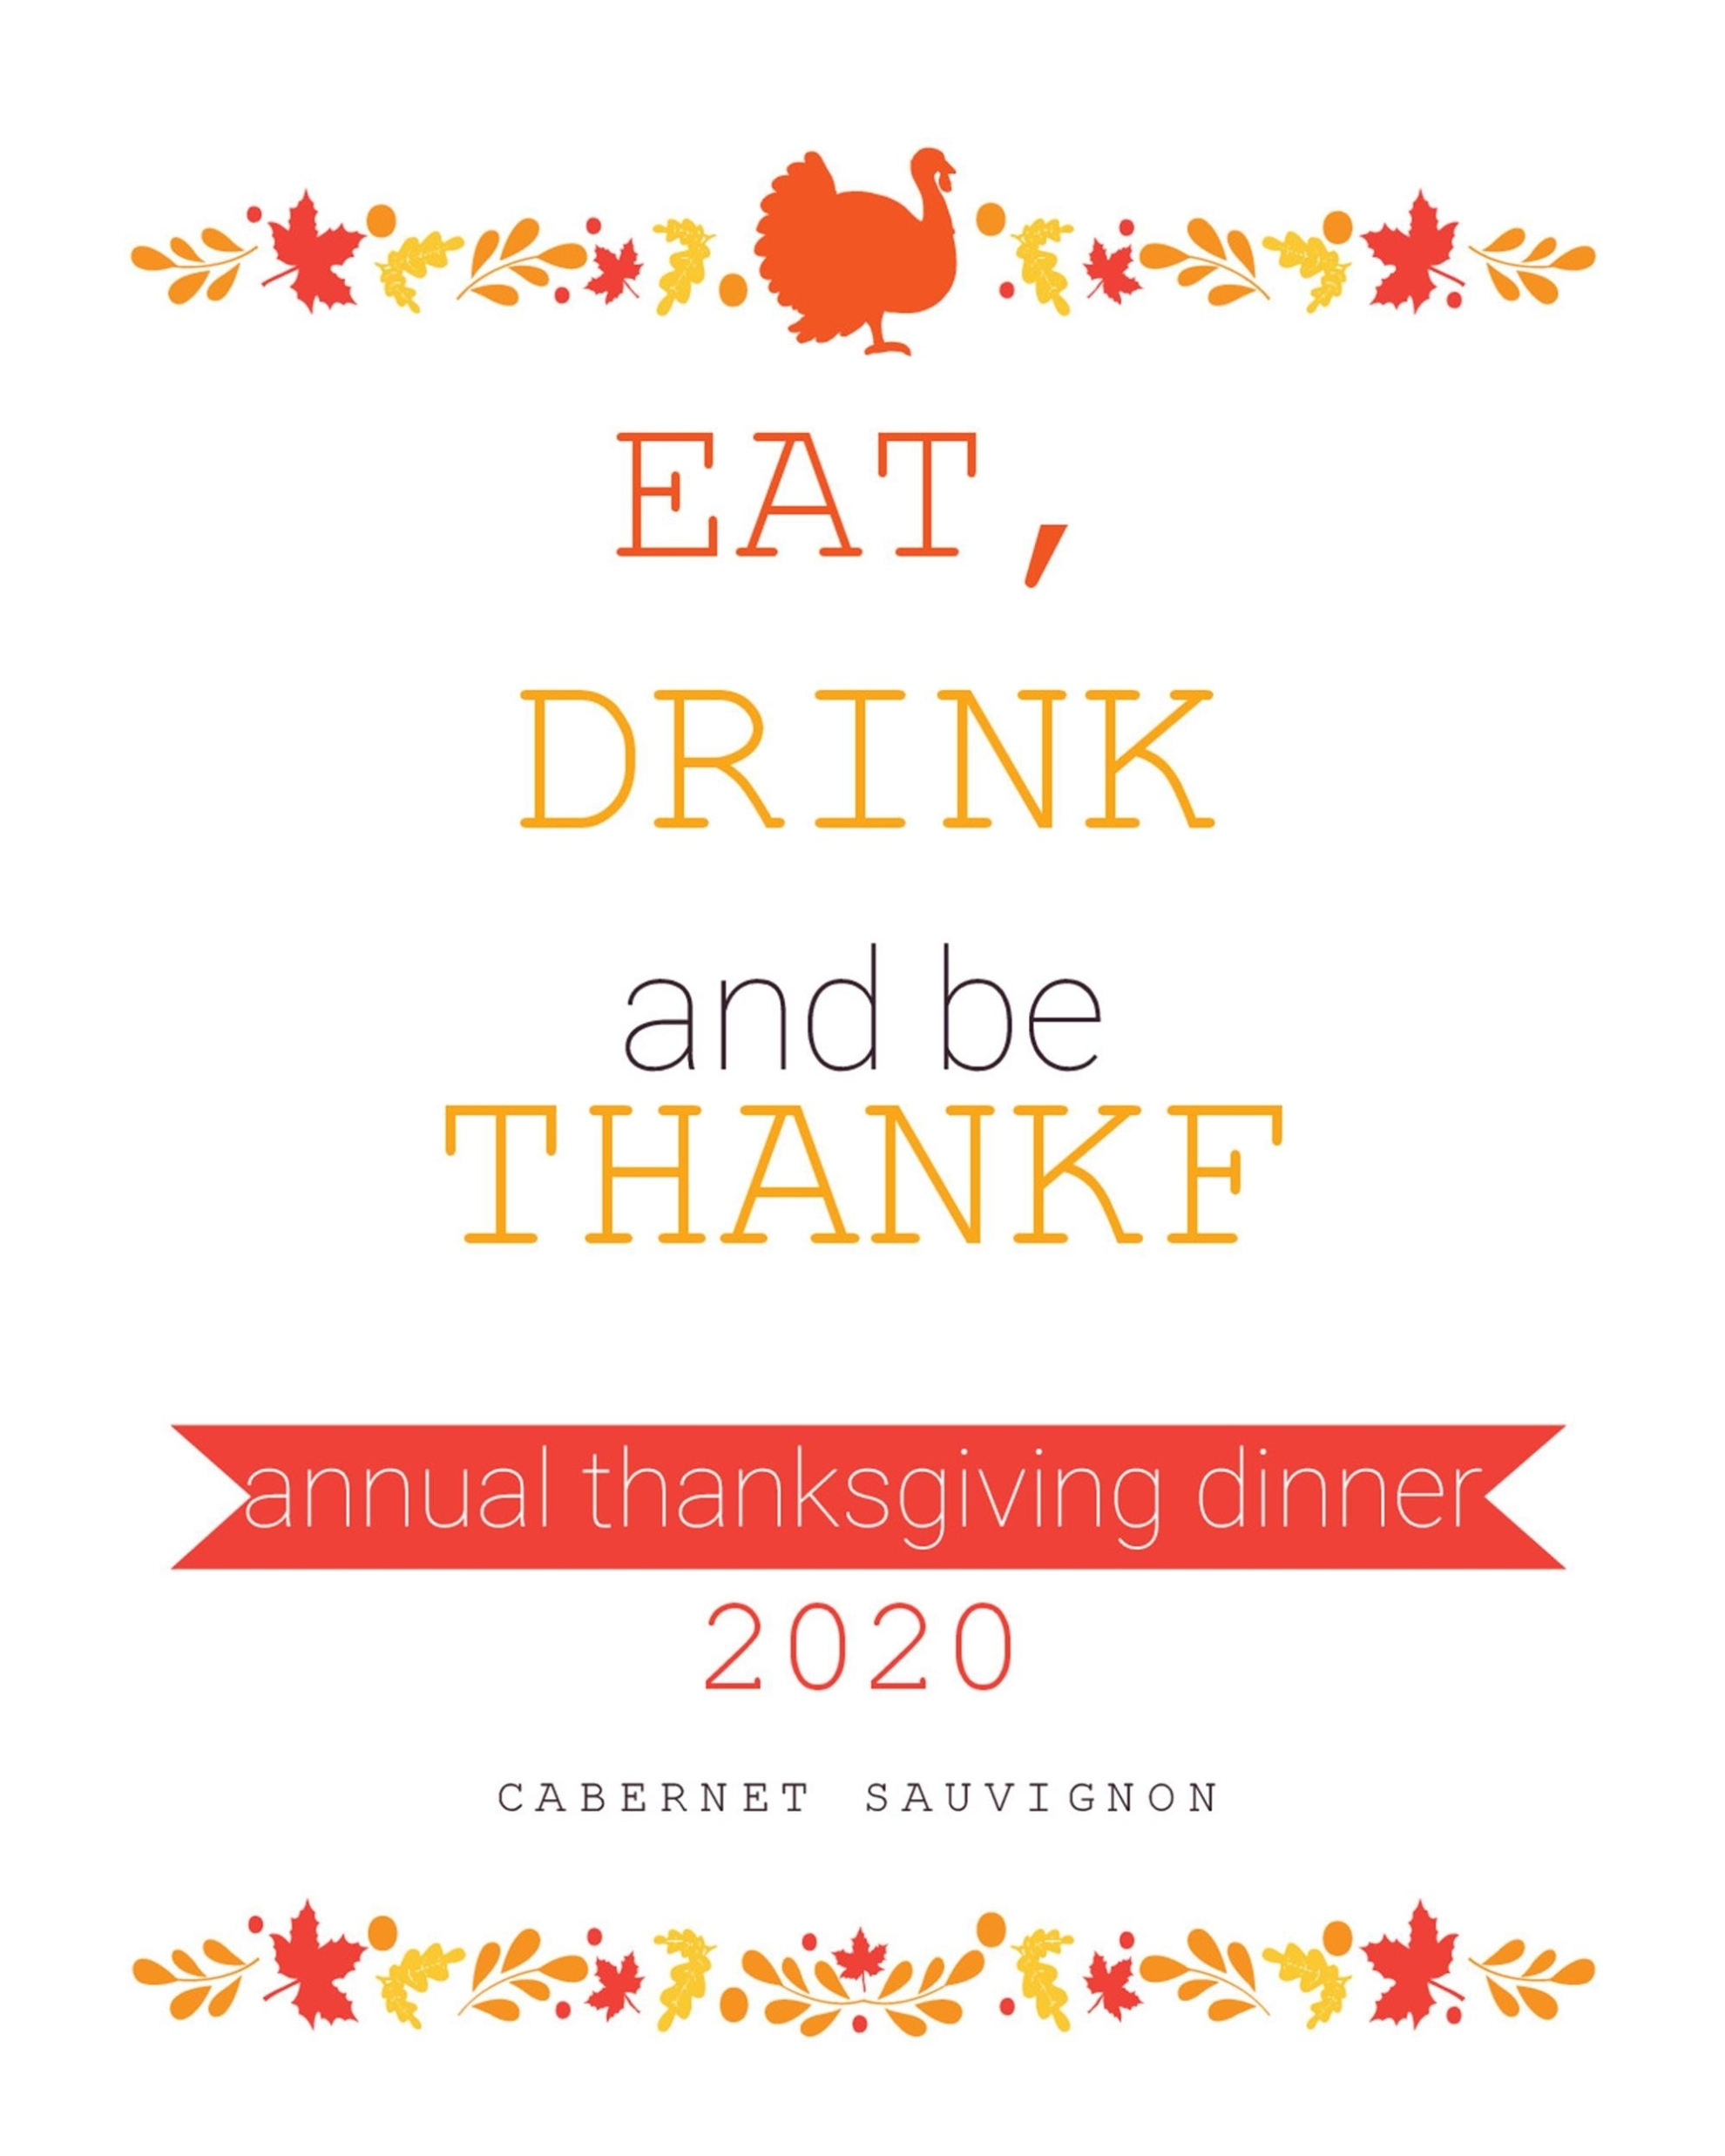 35 Awesome Thanksgiving Menu Templates ᐅ Templatelab intended for Thanksgiving Day Menu Template